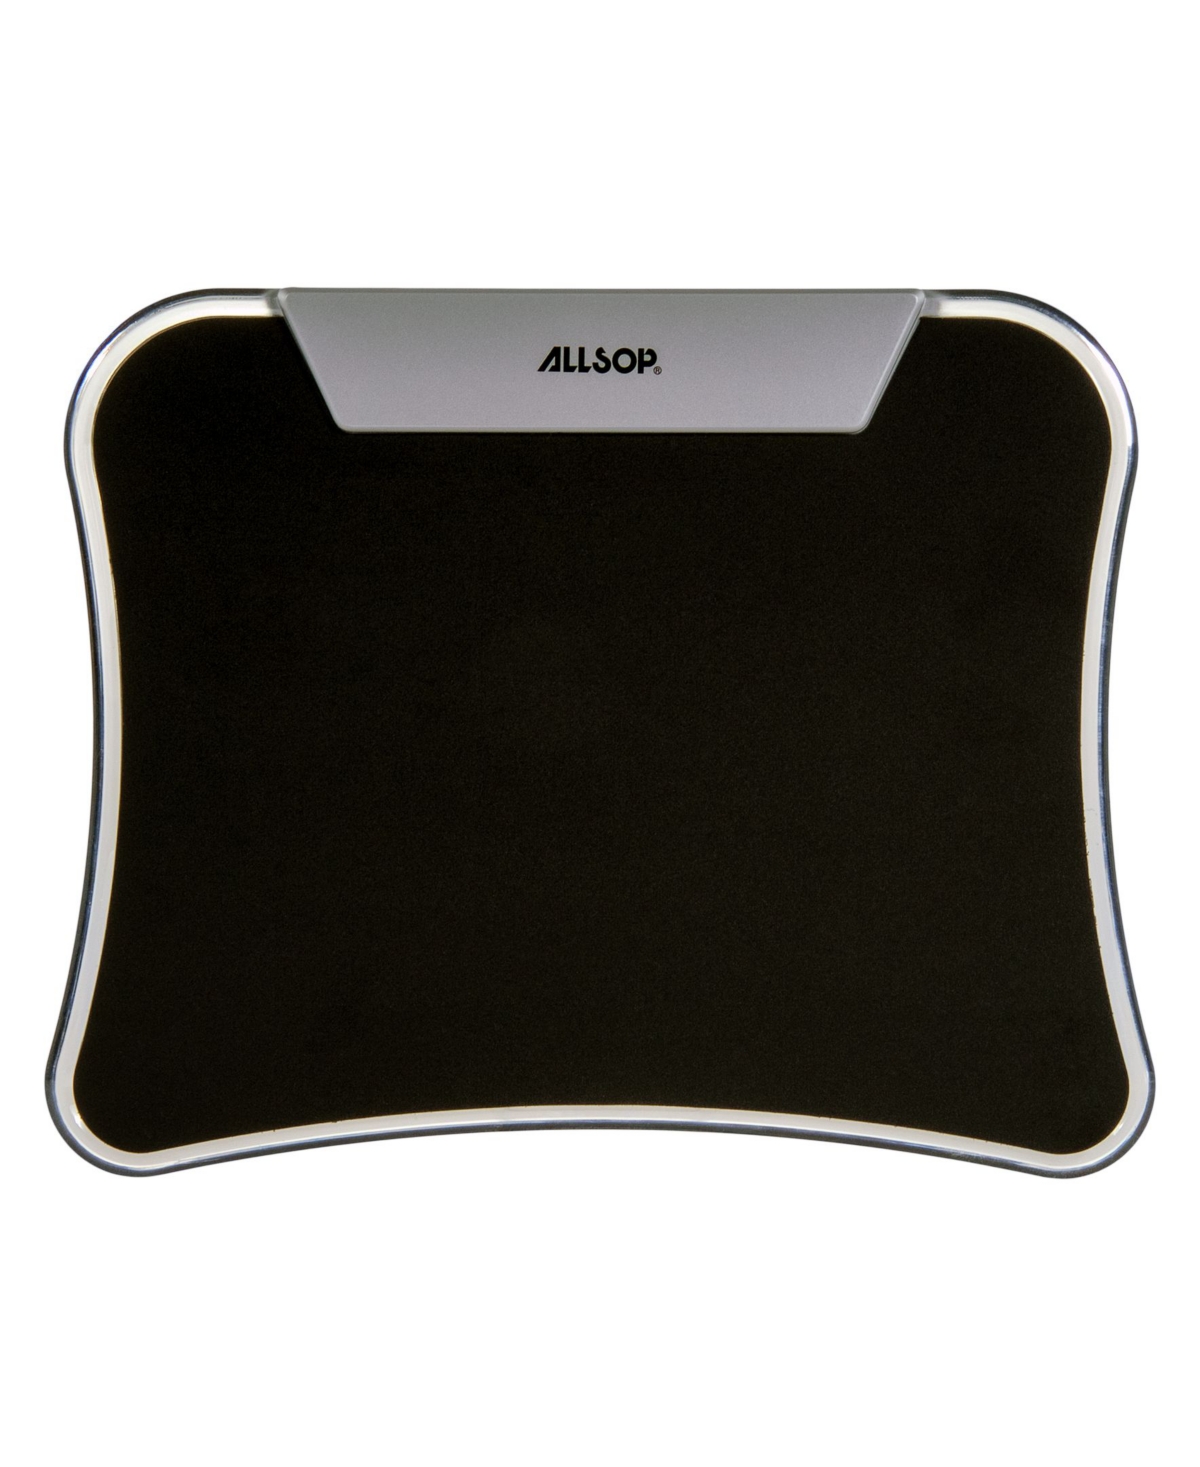 UPC 035286308656 product image for Allsop Led Mouse Pad | upcitemdb.com